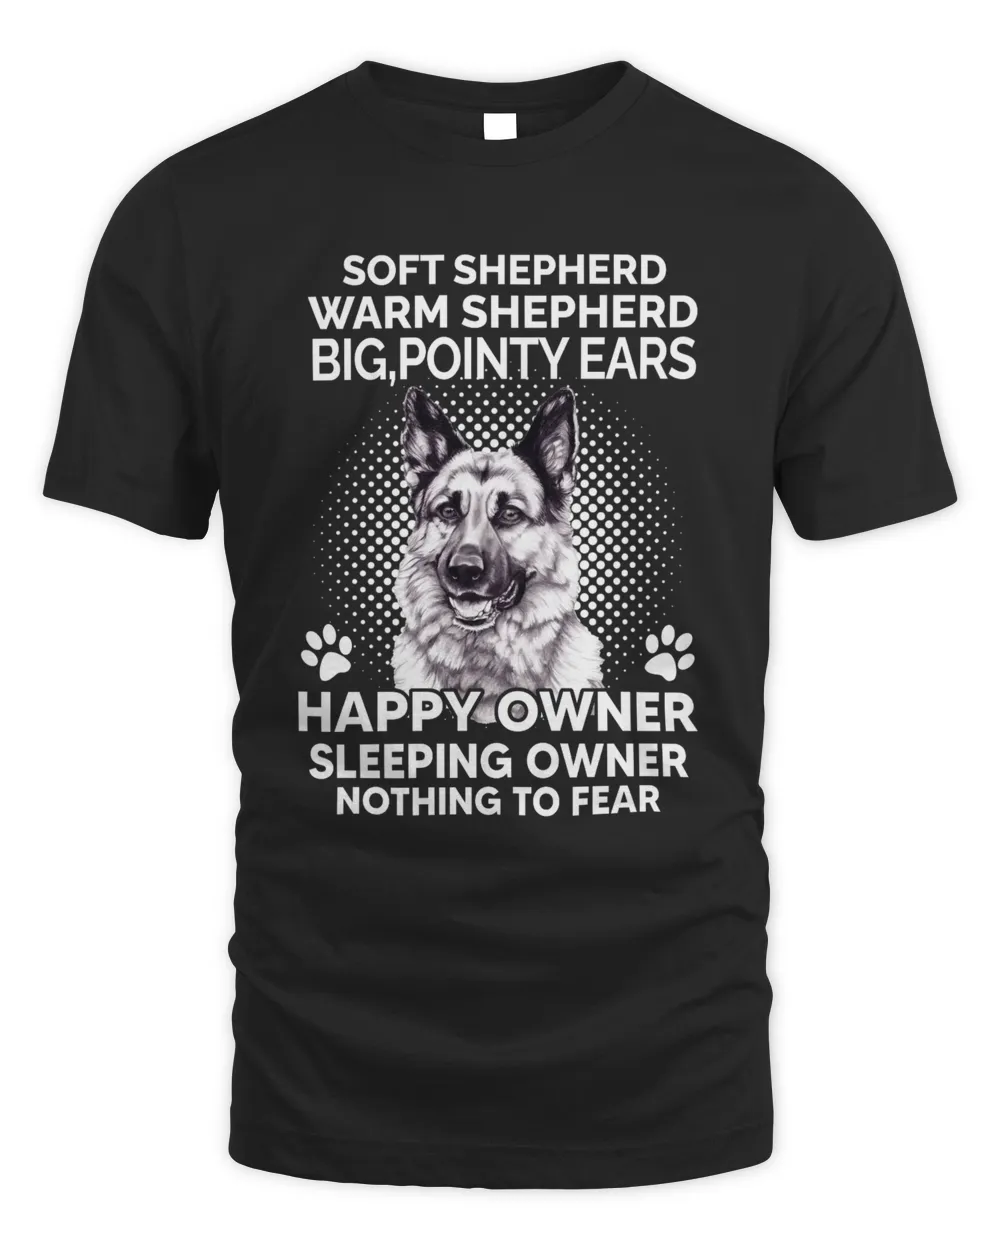 Soft Shepherd Warm Shepherd Big, Pointy Ears Happy Owner Sleeping Owner Nothing To Fear shirt